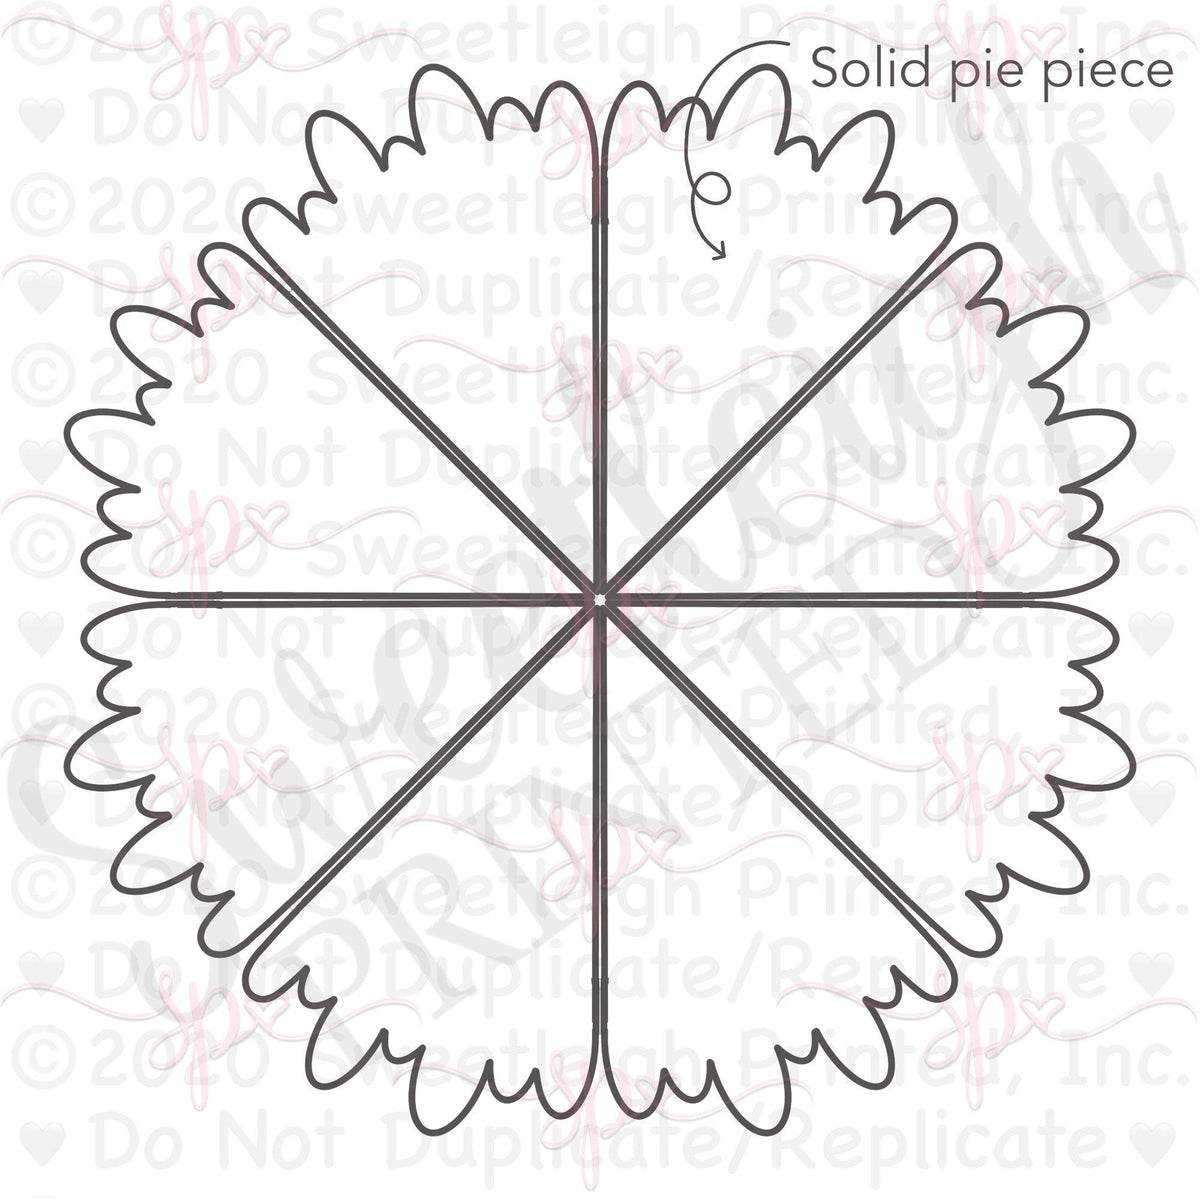 Build A Pie Platter Cookie Cutters Set - Sweetleigh 